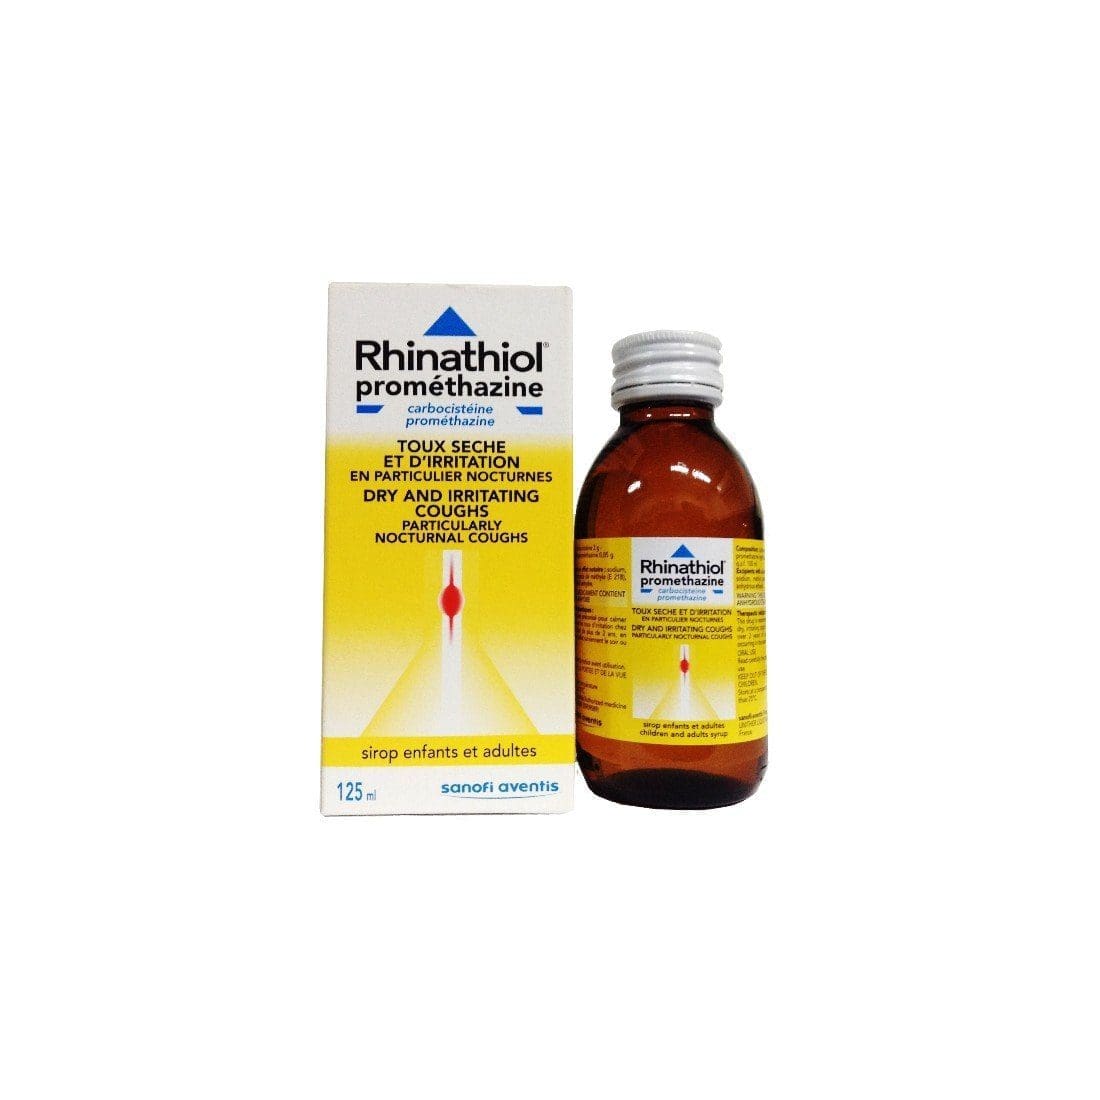 Rhinathiol With Promethazine 125ml